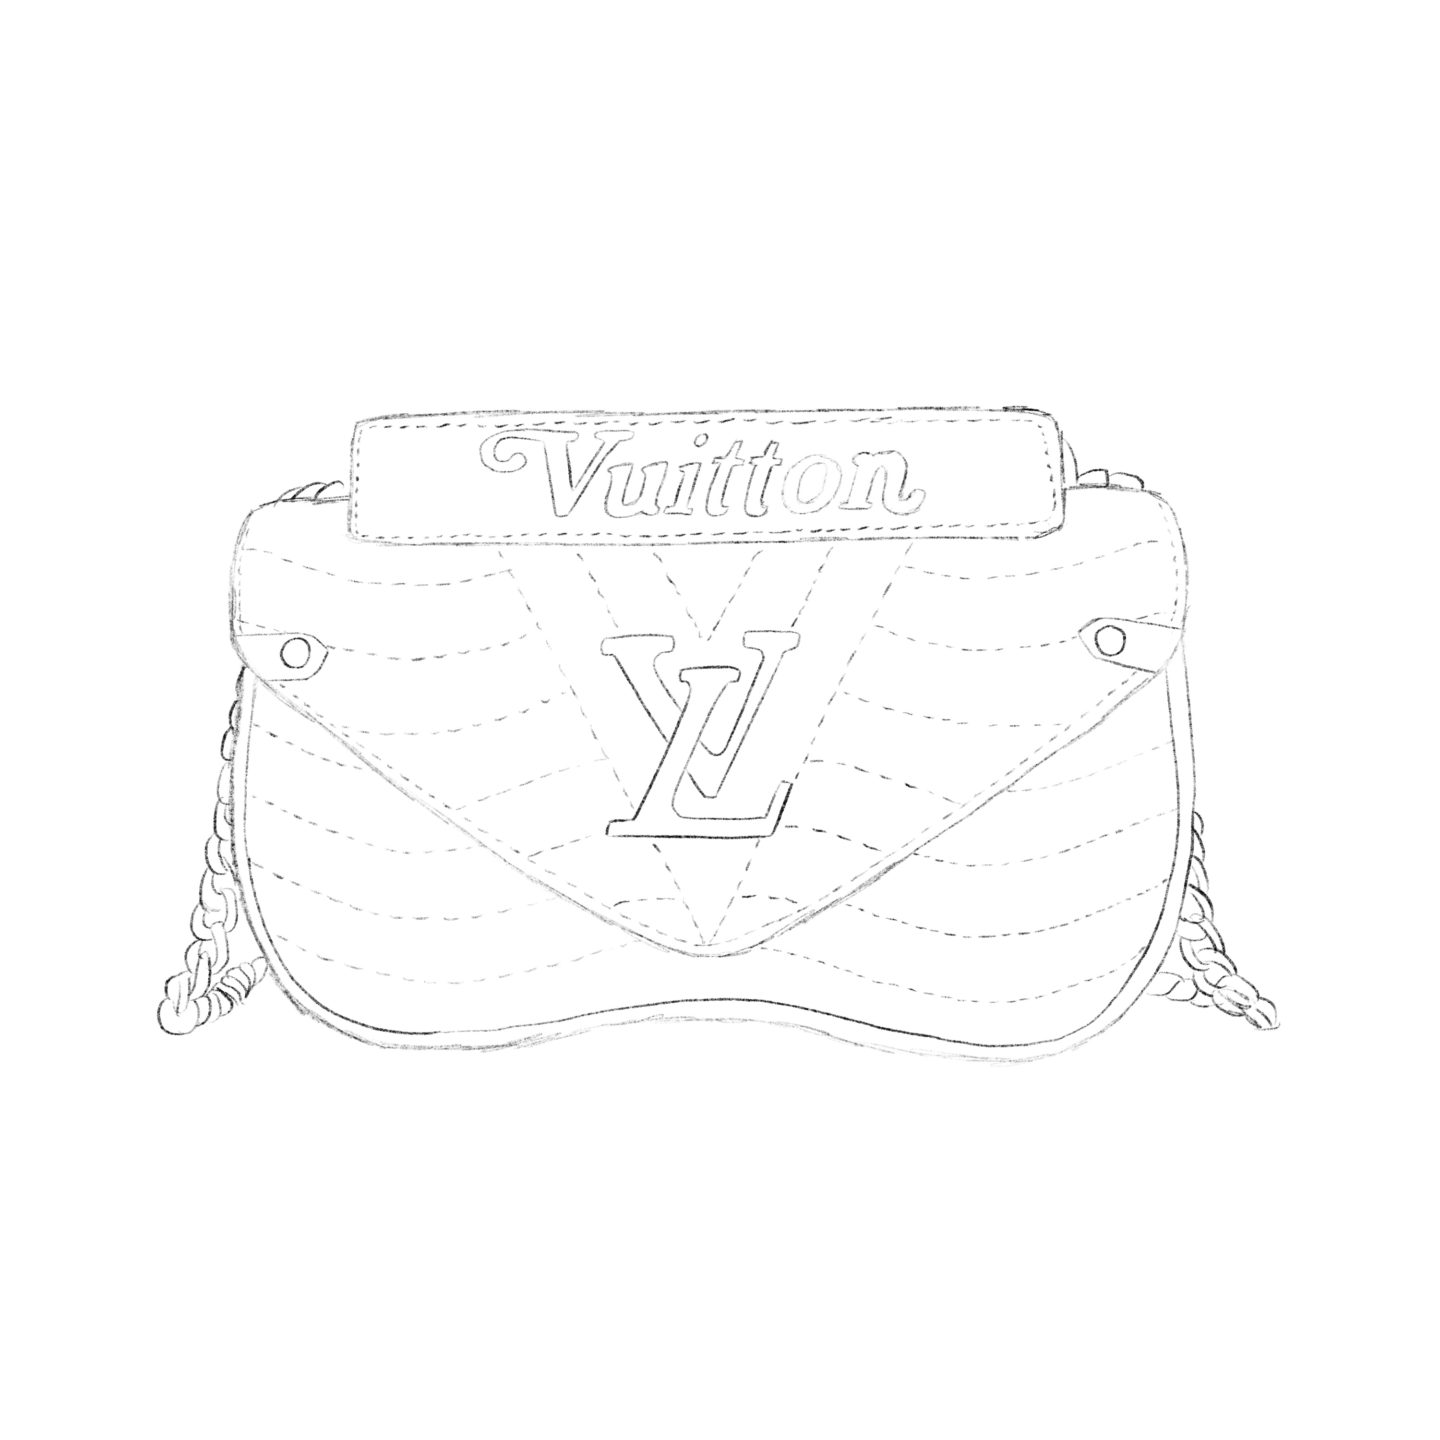 How to Draw a Louis Vuitton Bag Lola Glenn